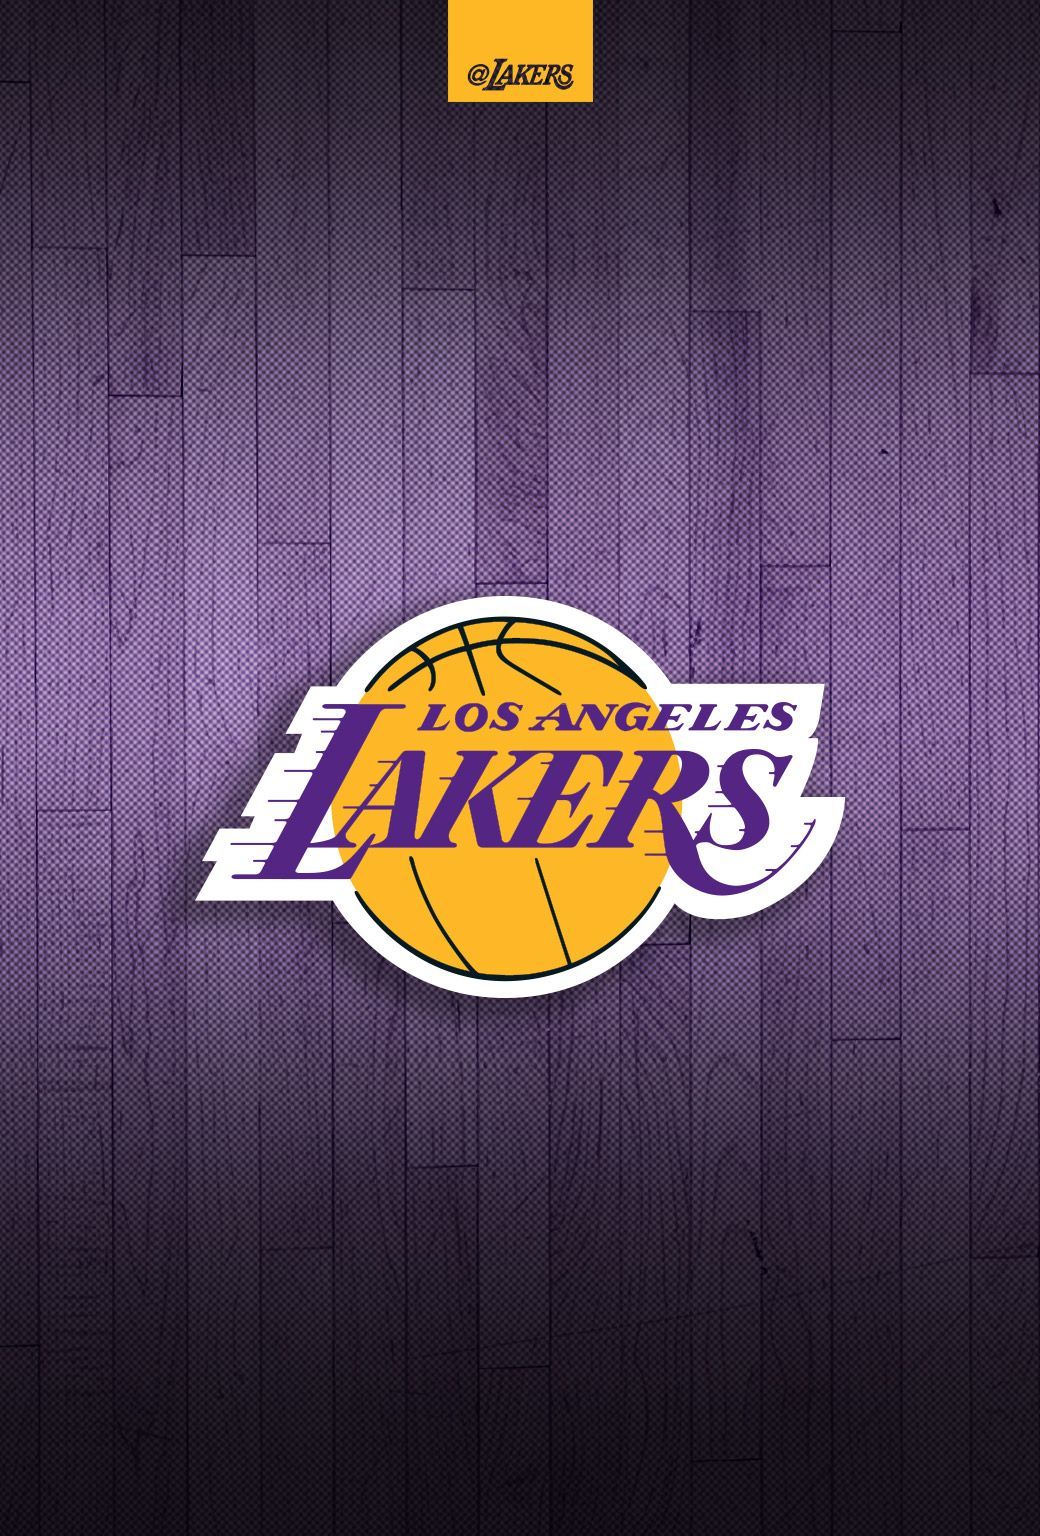 Lakers Wallpaper Android Wallpaper HD. Lakers wallpaper, Los angeles lakers, Lakers logo